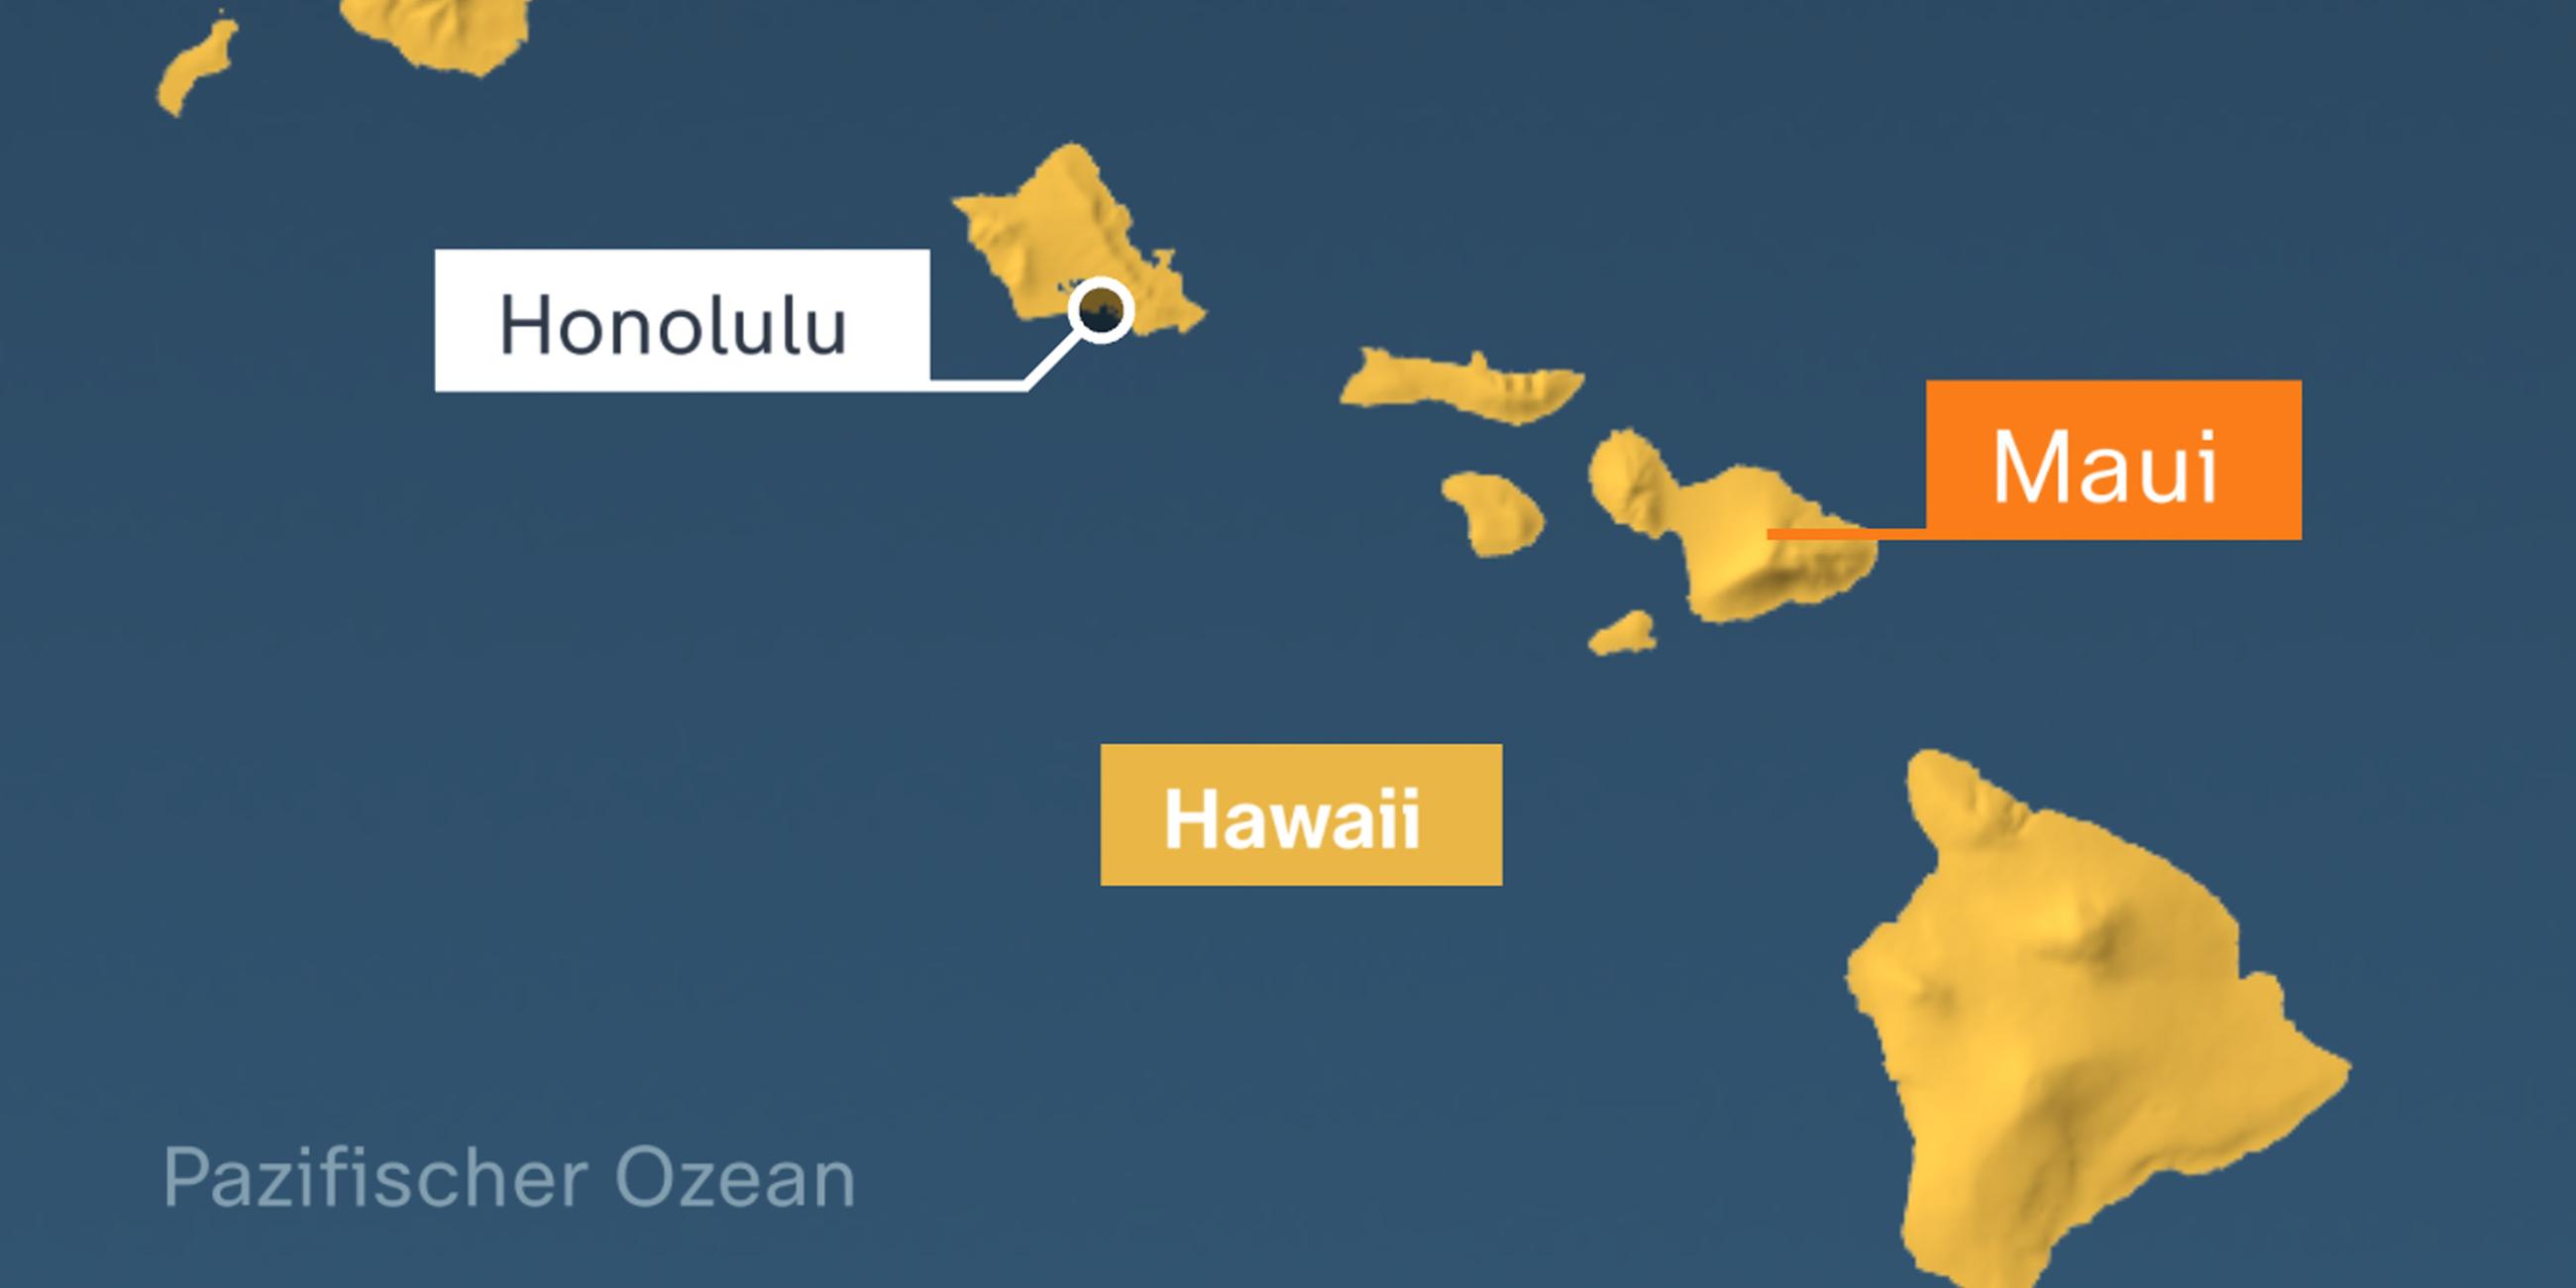 Karte: Inselgruppe Hawaii mit Insel Maui